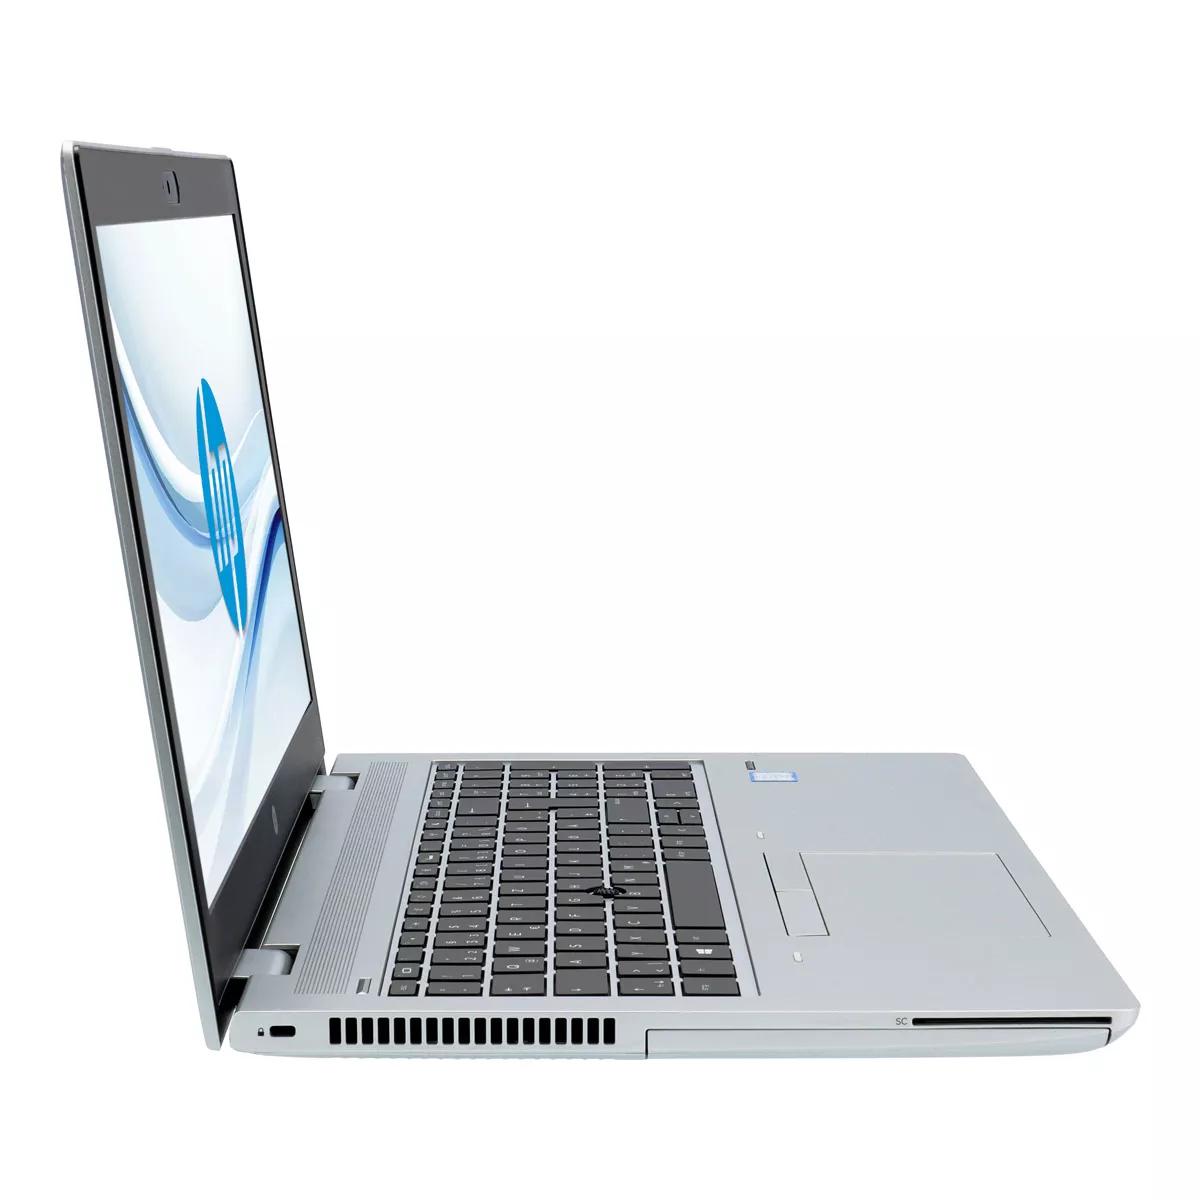 HP ProBook 650 G4 Core i5 8350U Full-HD 240 GB M.2 SSD Webcam B